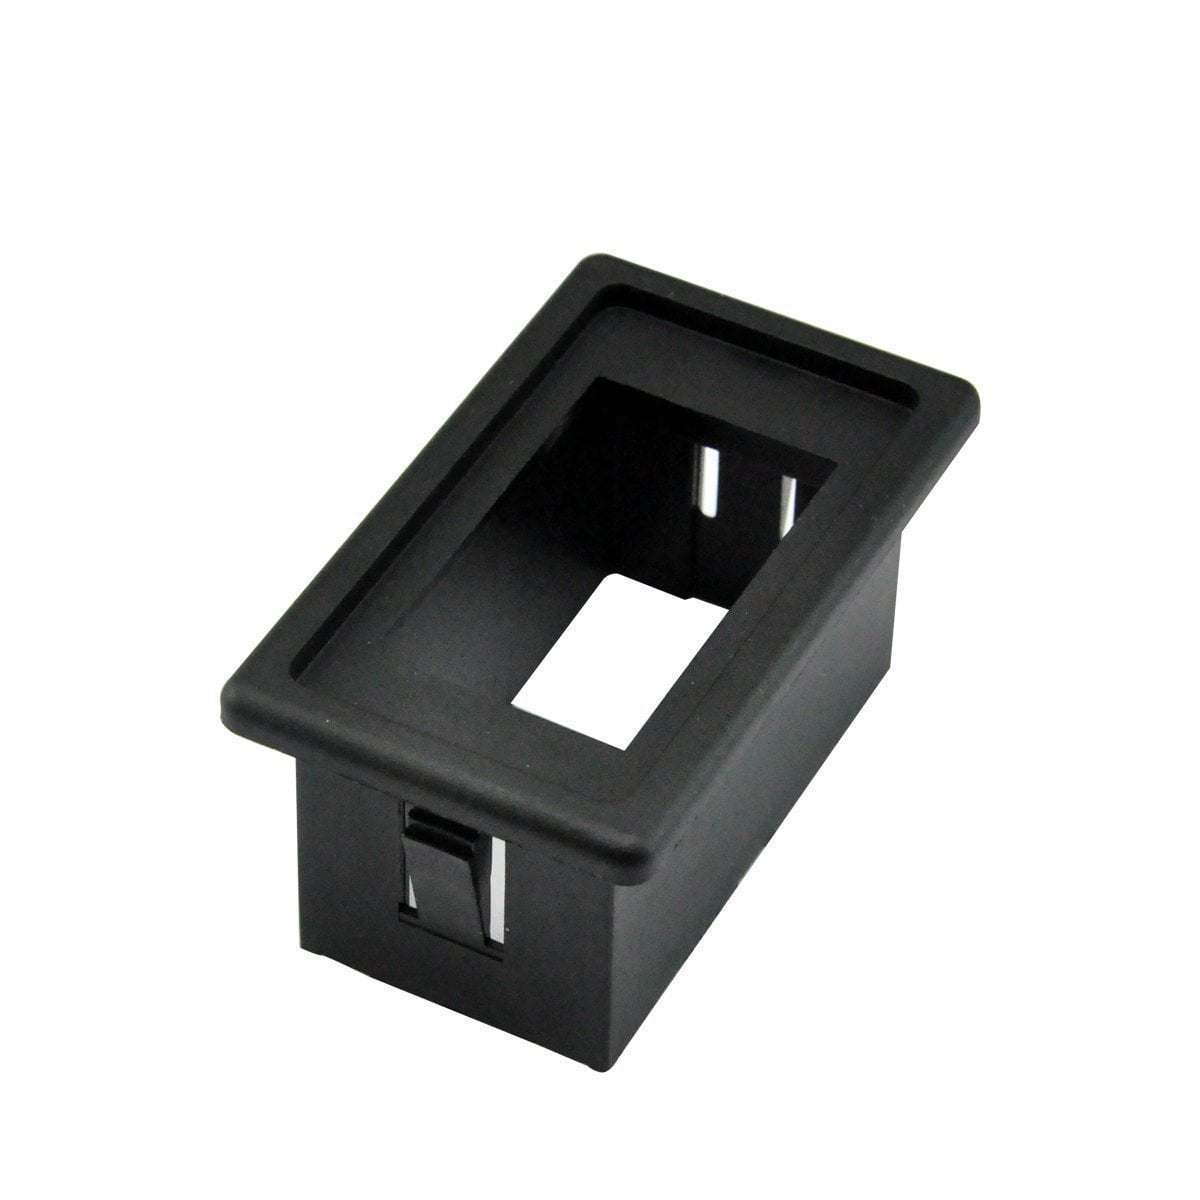 6pcs Black Plastic AutoEC Rocker Switch Panel Switch Holder Housing Kit